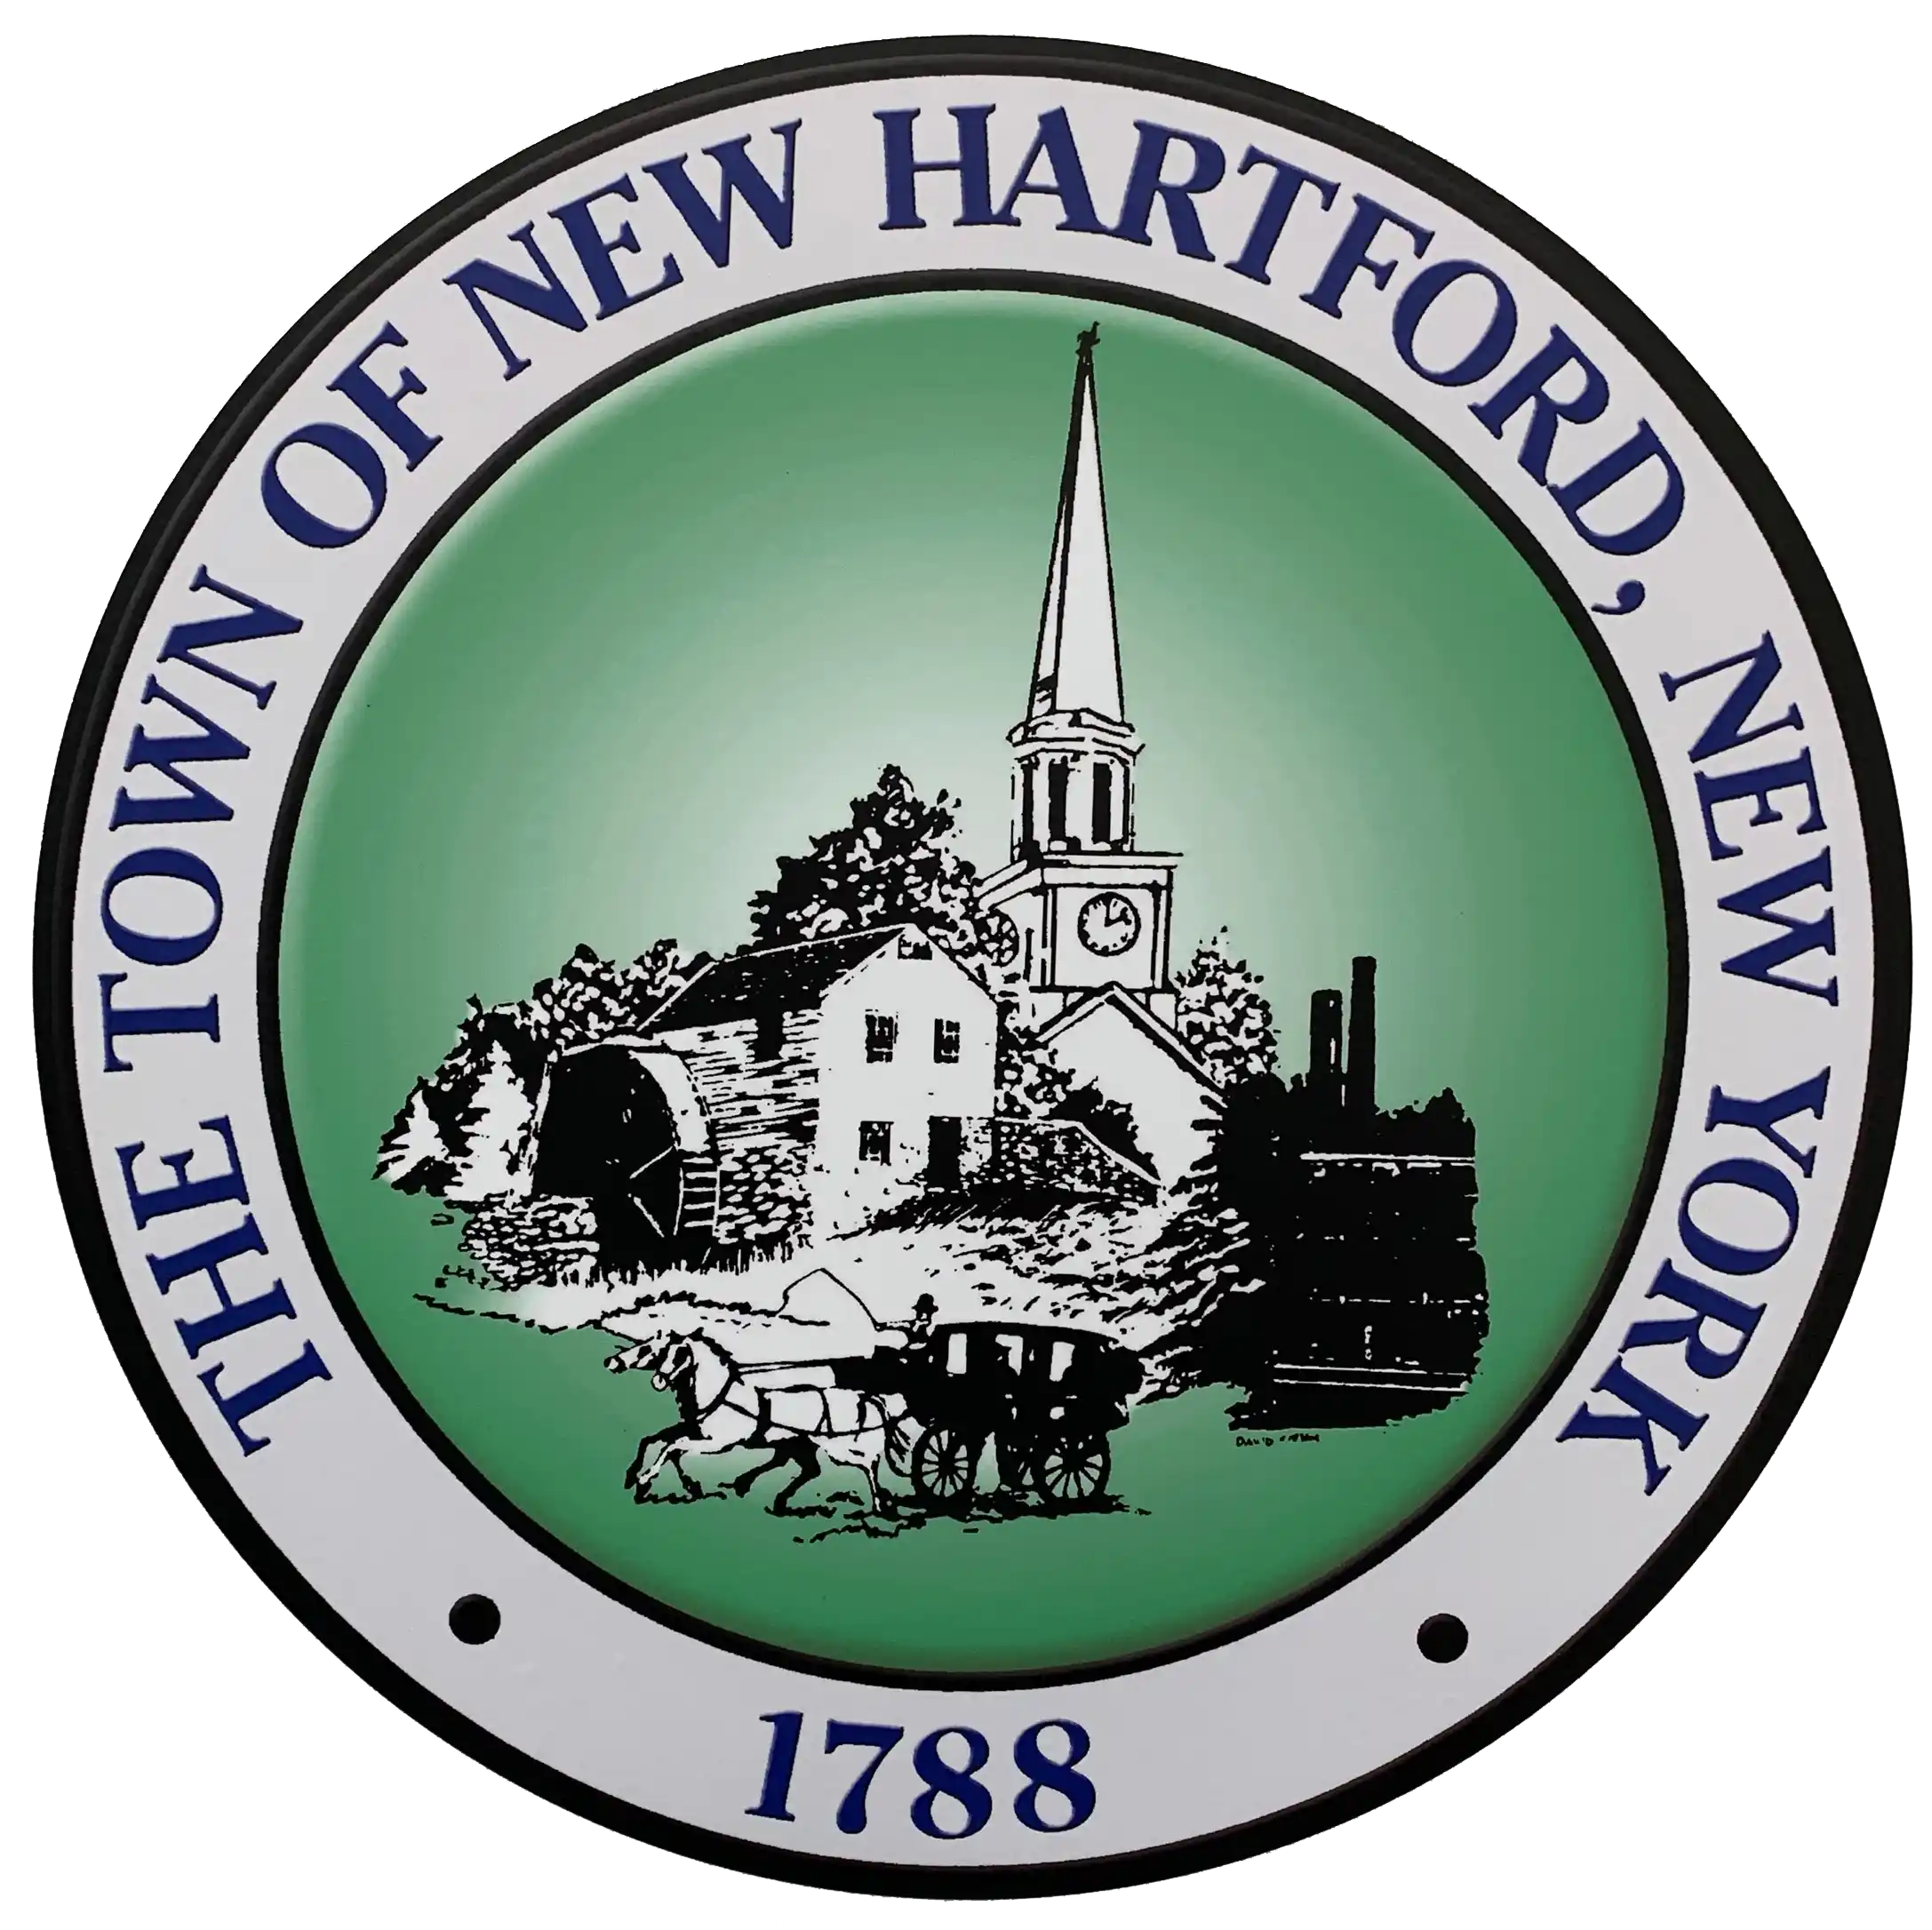 New Hartford, New York logo